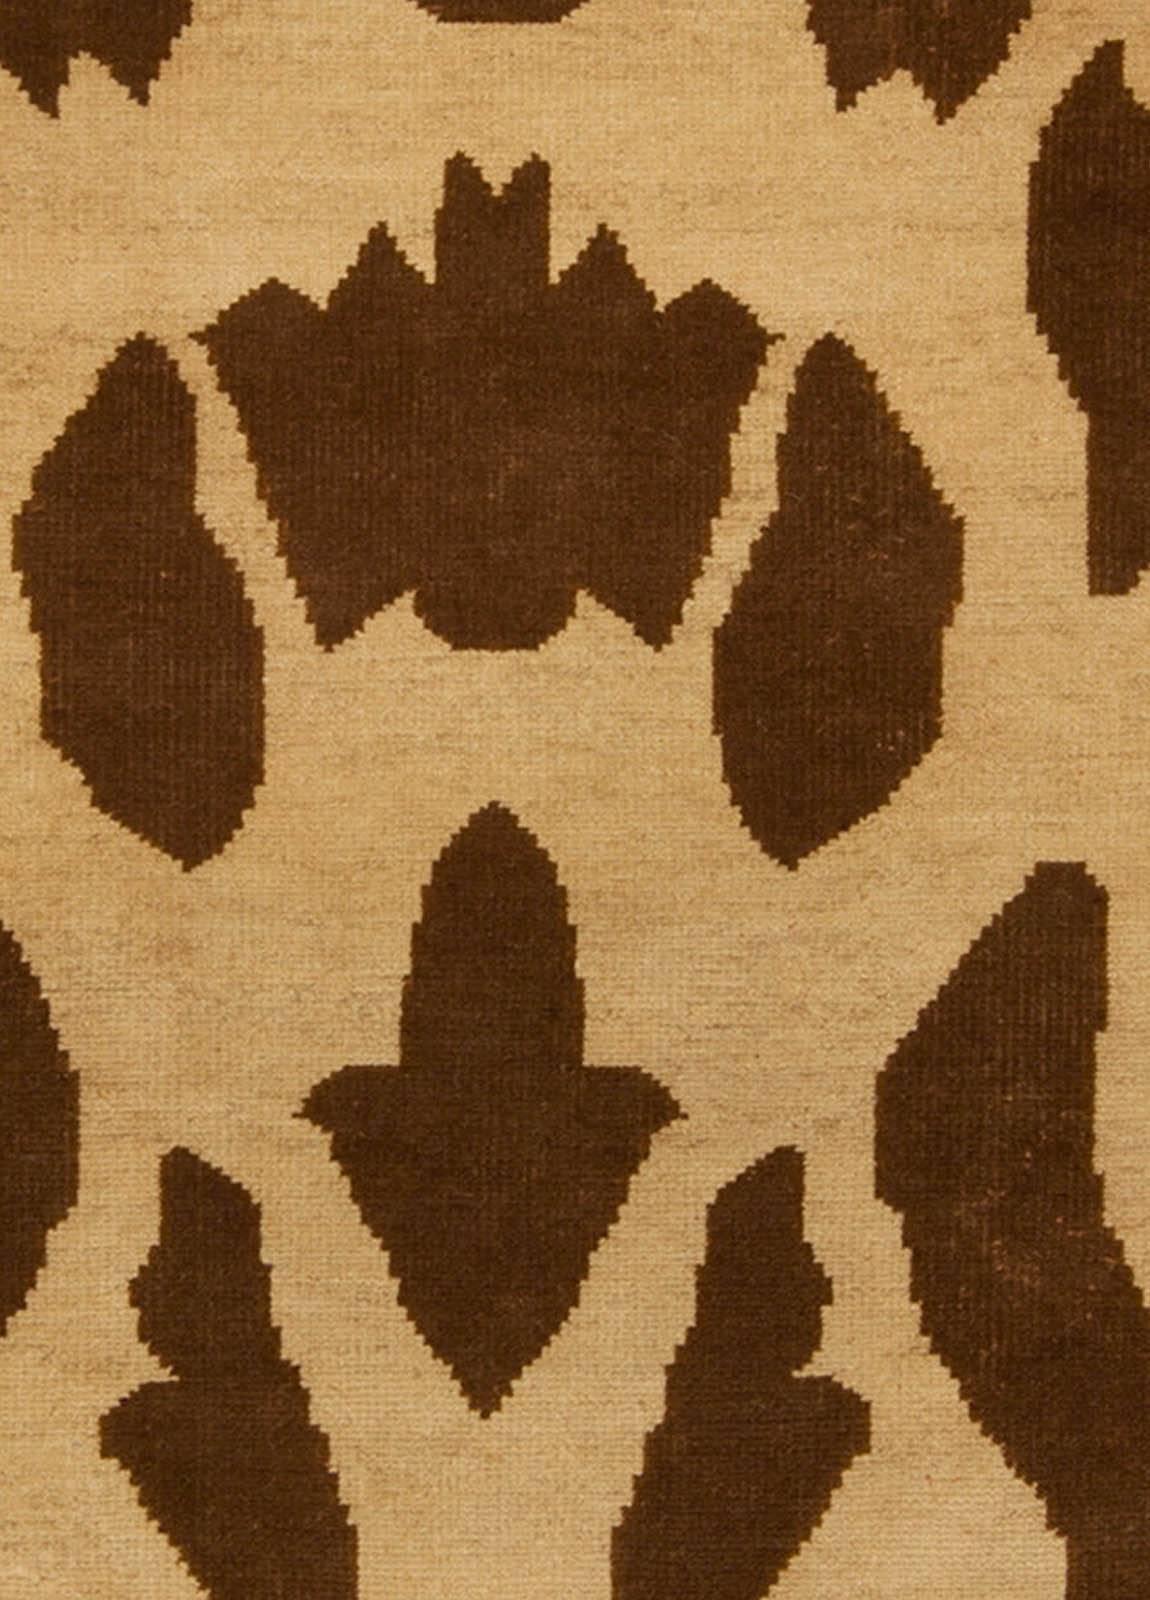 Doris Leslie Blau collection leopard beige and brown rug
Size: 9'0